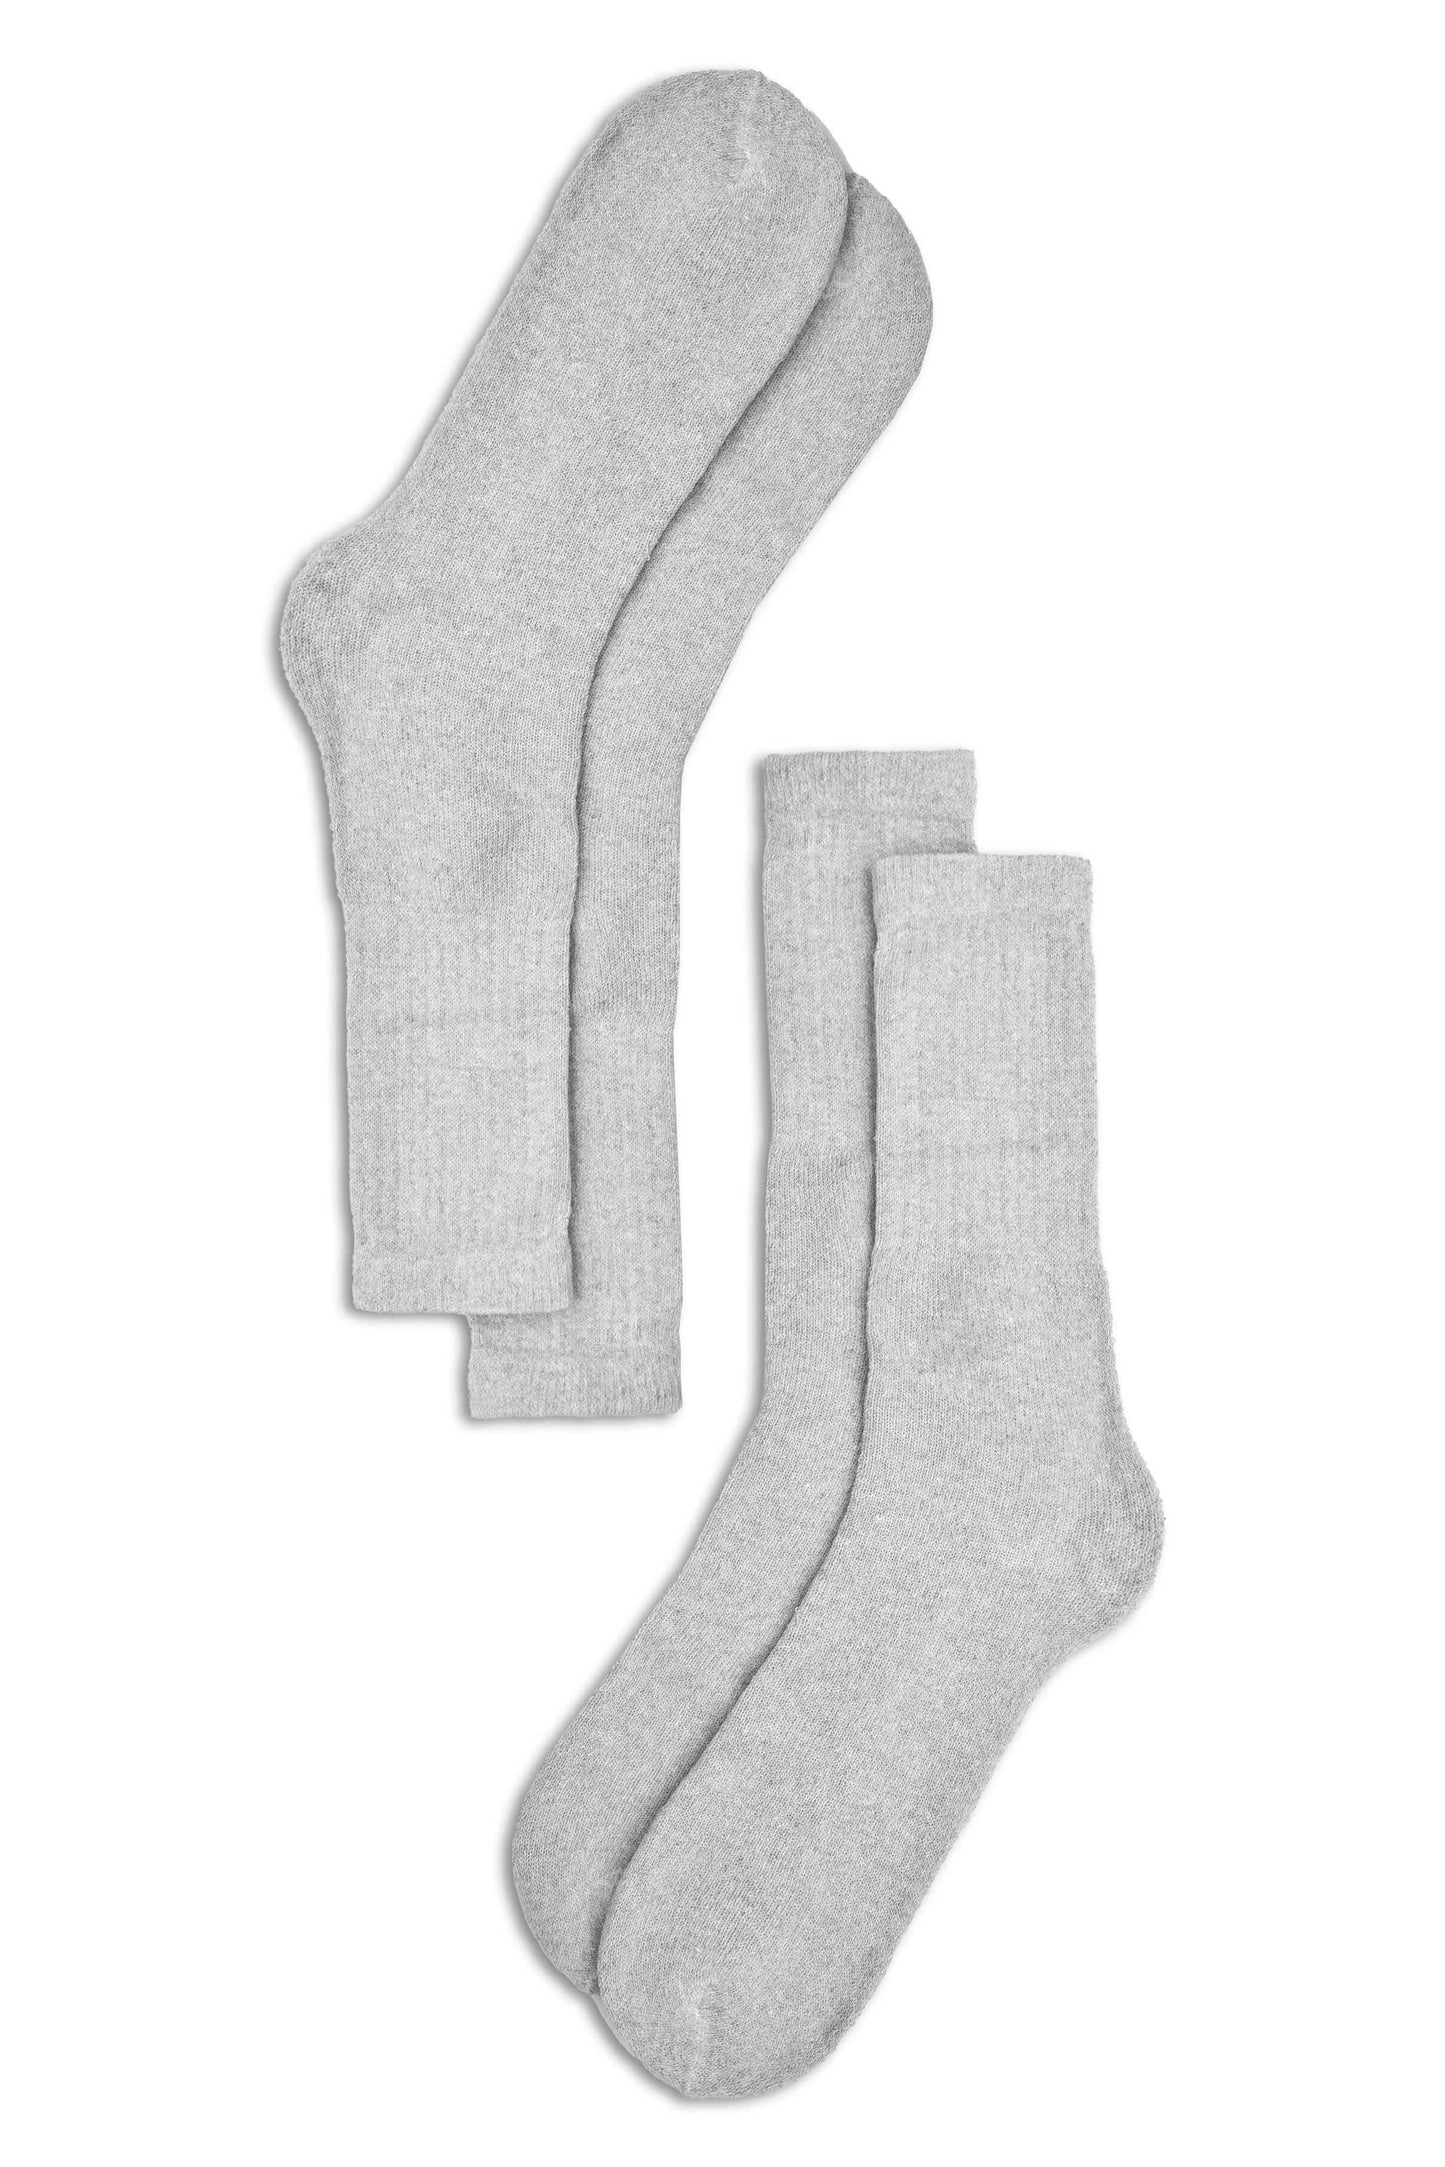 Men's Wavre Crew Socks - Pack Of 2 Pairs